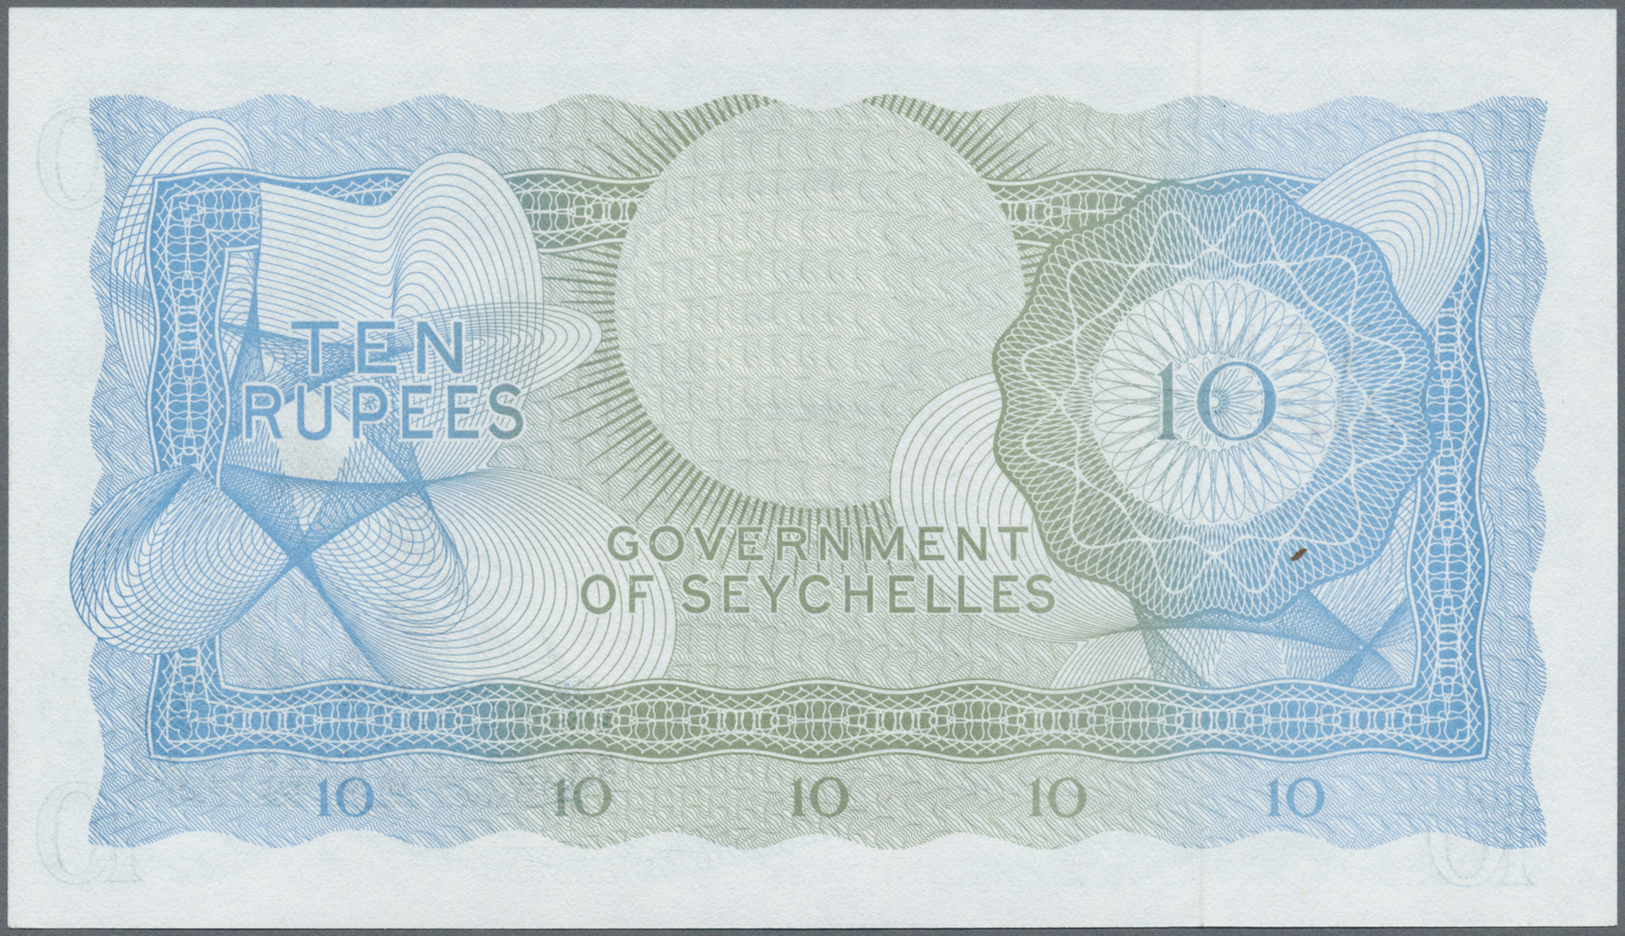 02892 Seychelles / Seychellen: 10 Rupees ND P. 15b In Condition: UNC. - Seychelles